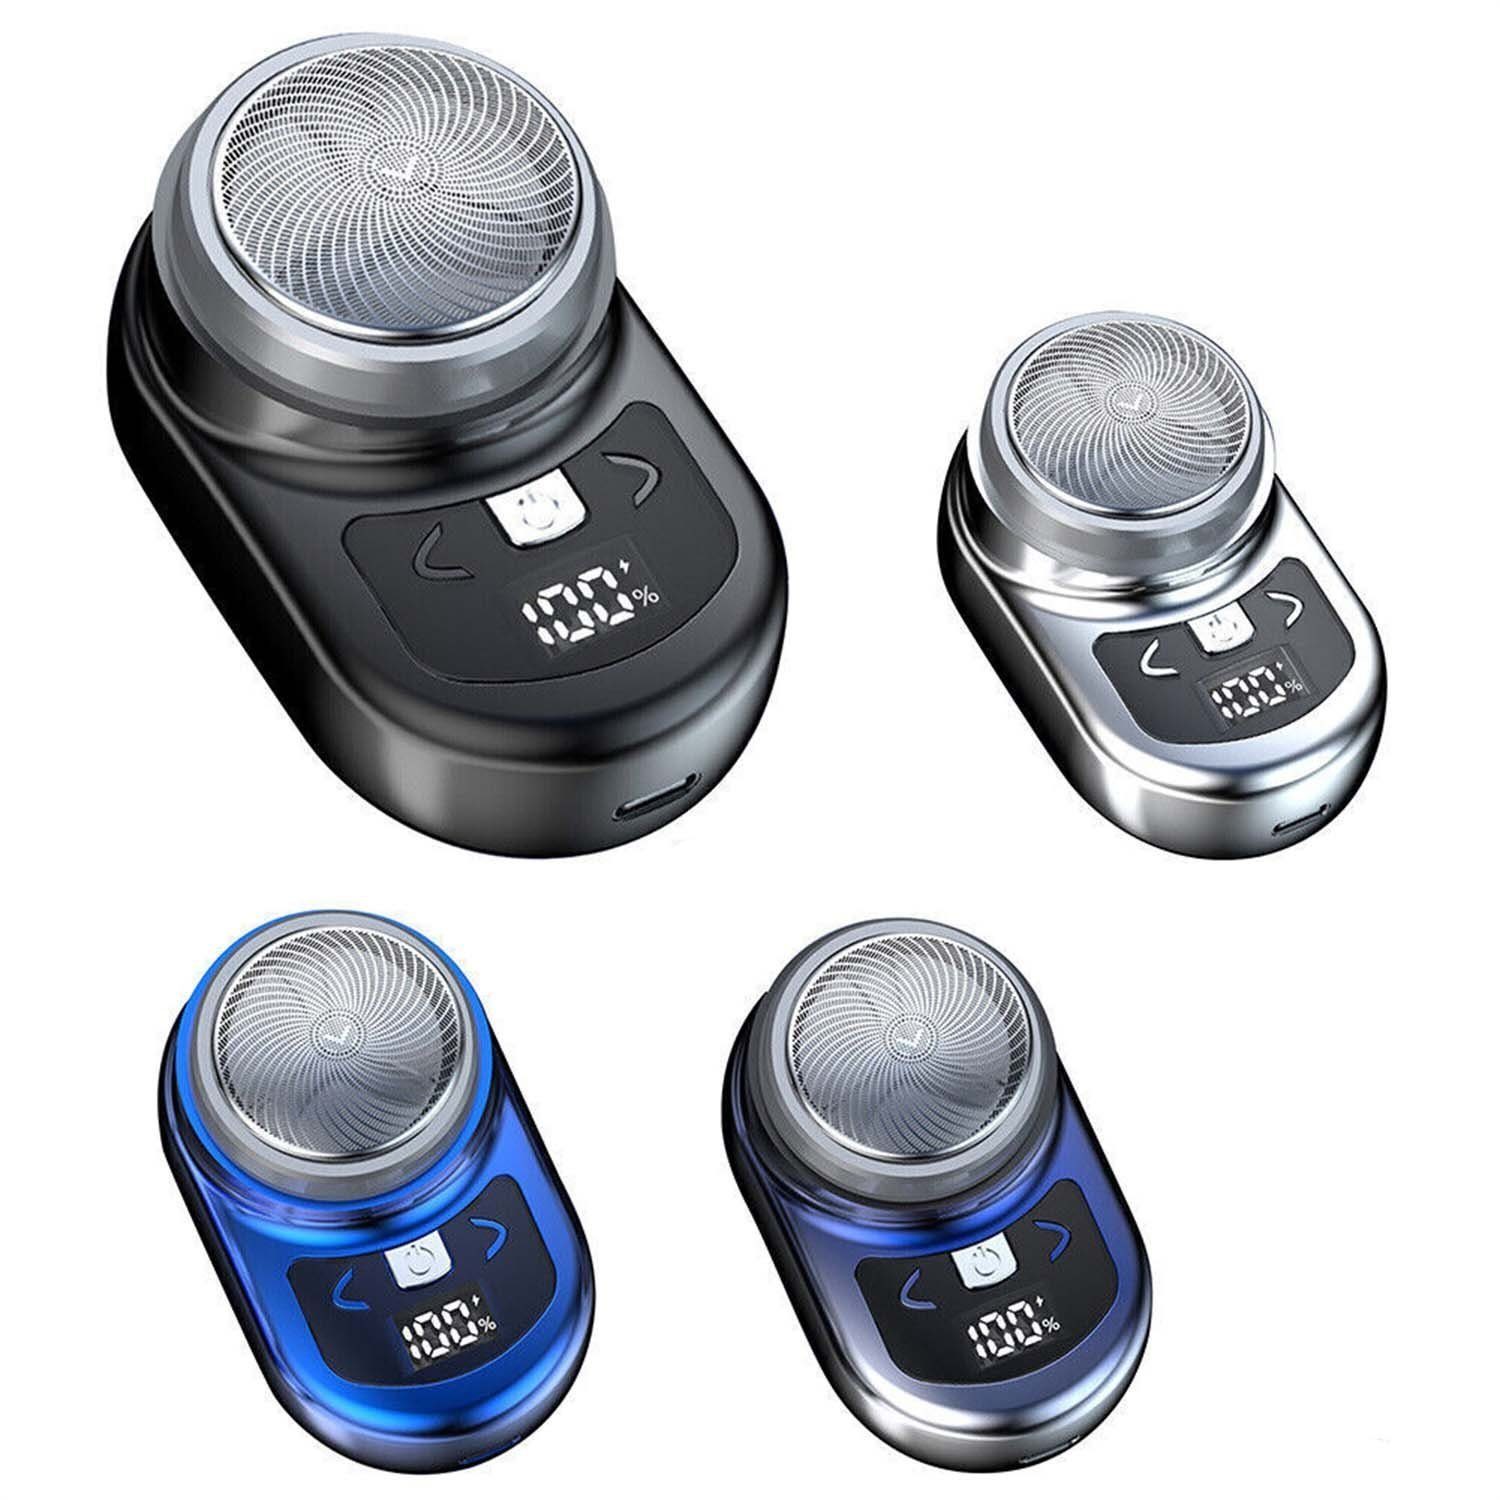 Mini-tragbar mit Körperrasierer XDOVET USB-Aufladung, Elektrokörperrasierer silver Leistungsanzeige,